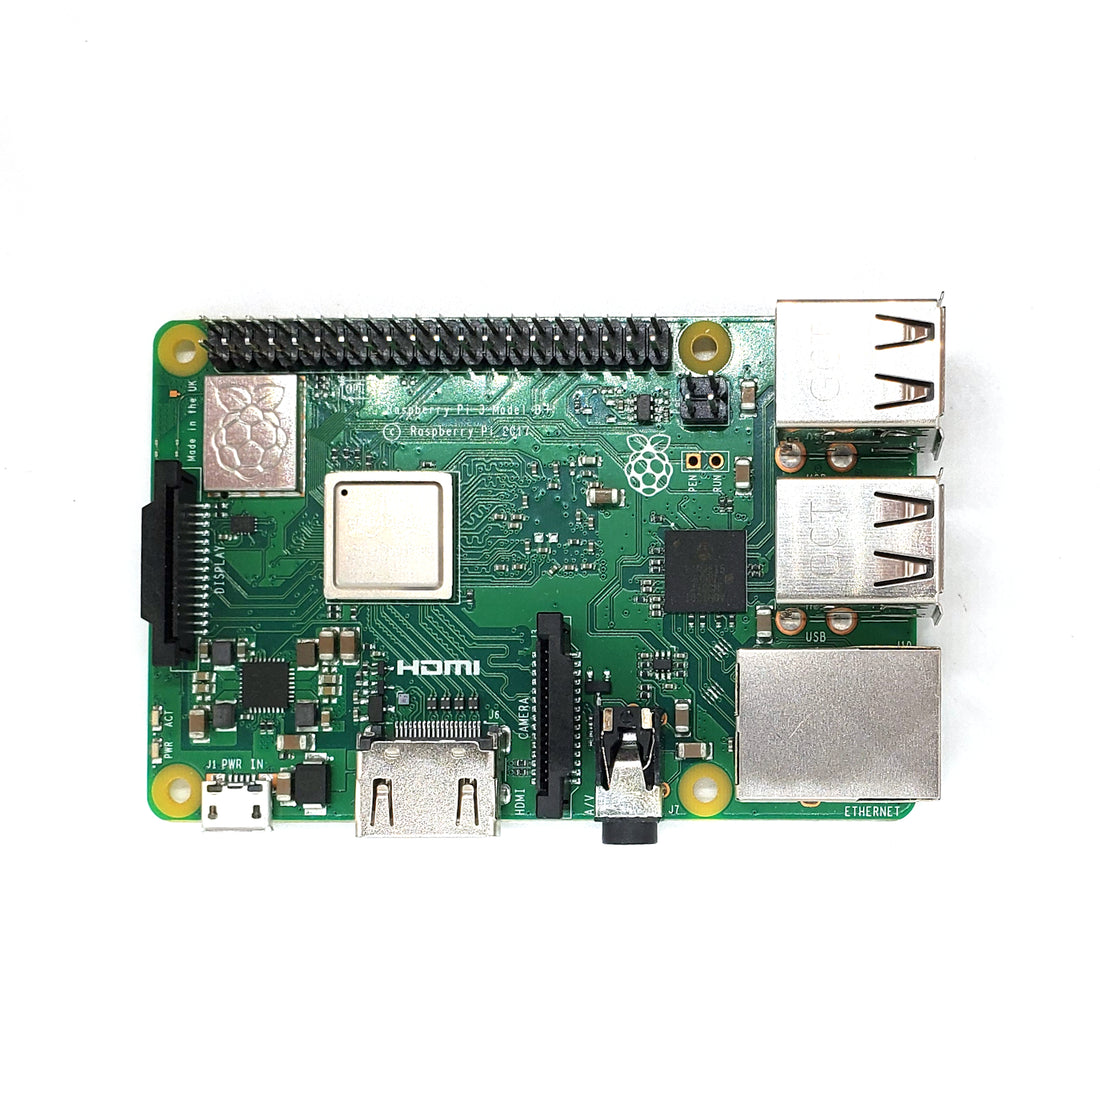 PepperTech Digital Raspberry Pi 3 Model B+ Sense HAT Value Pack (Includes Element14 Raspberry Pi 3 B+, Raspberry Pi Sense HAT and Pi HAT Enclosure)